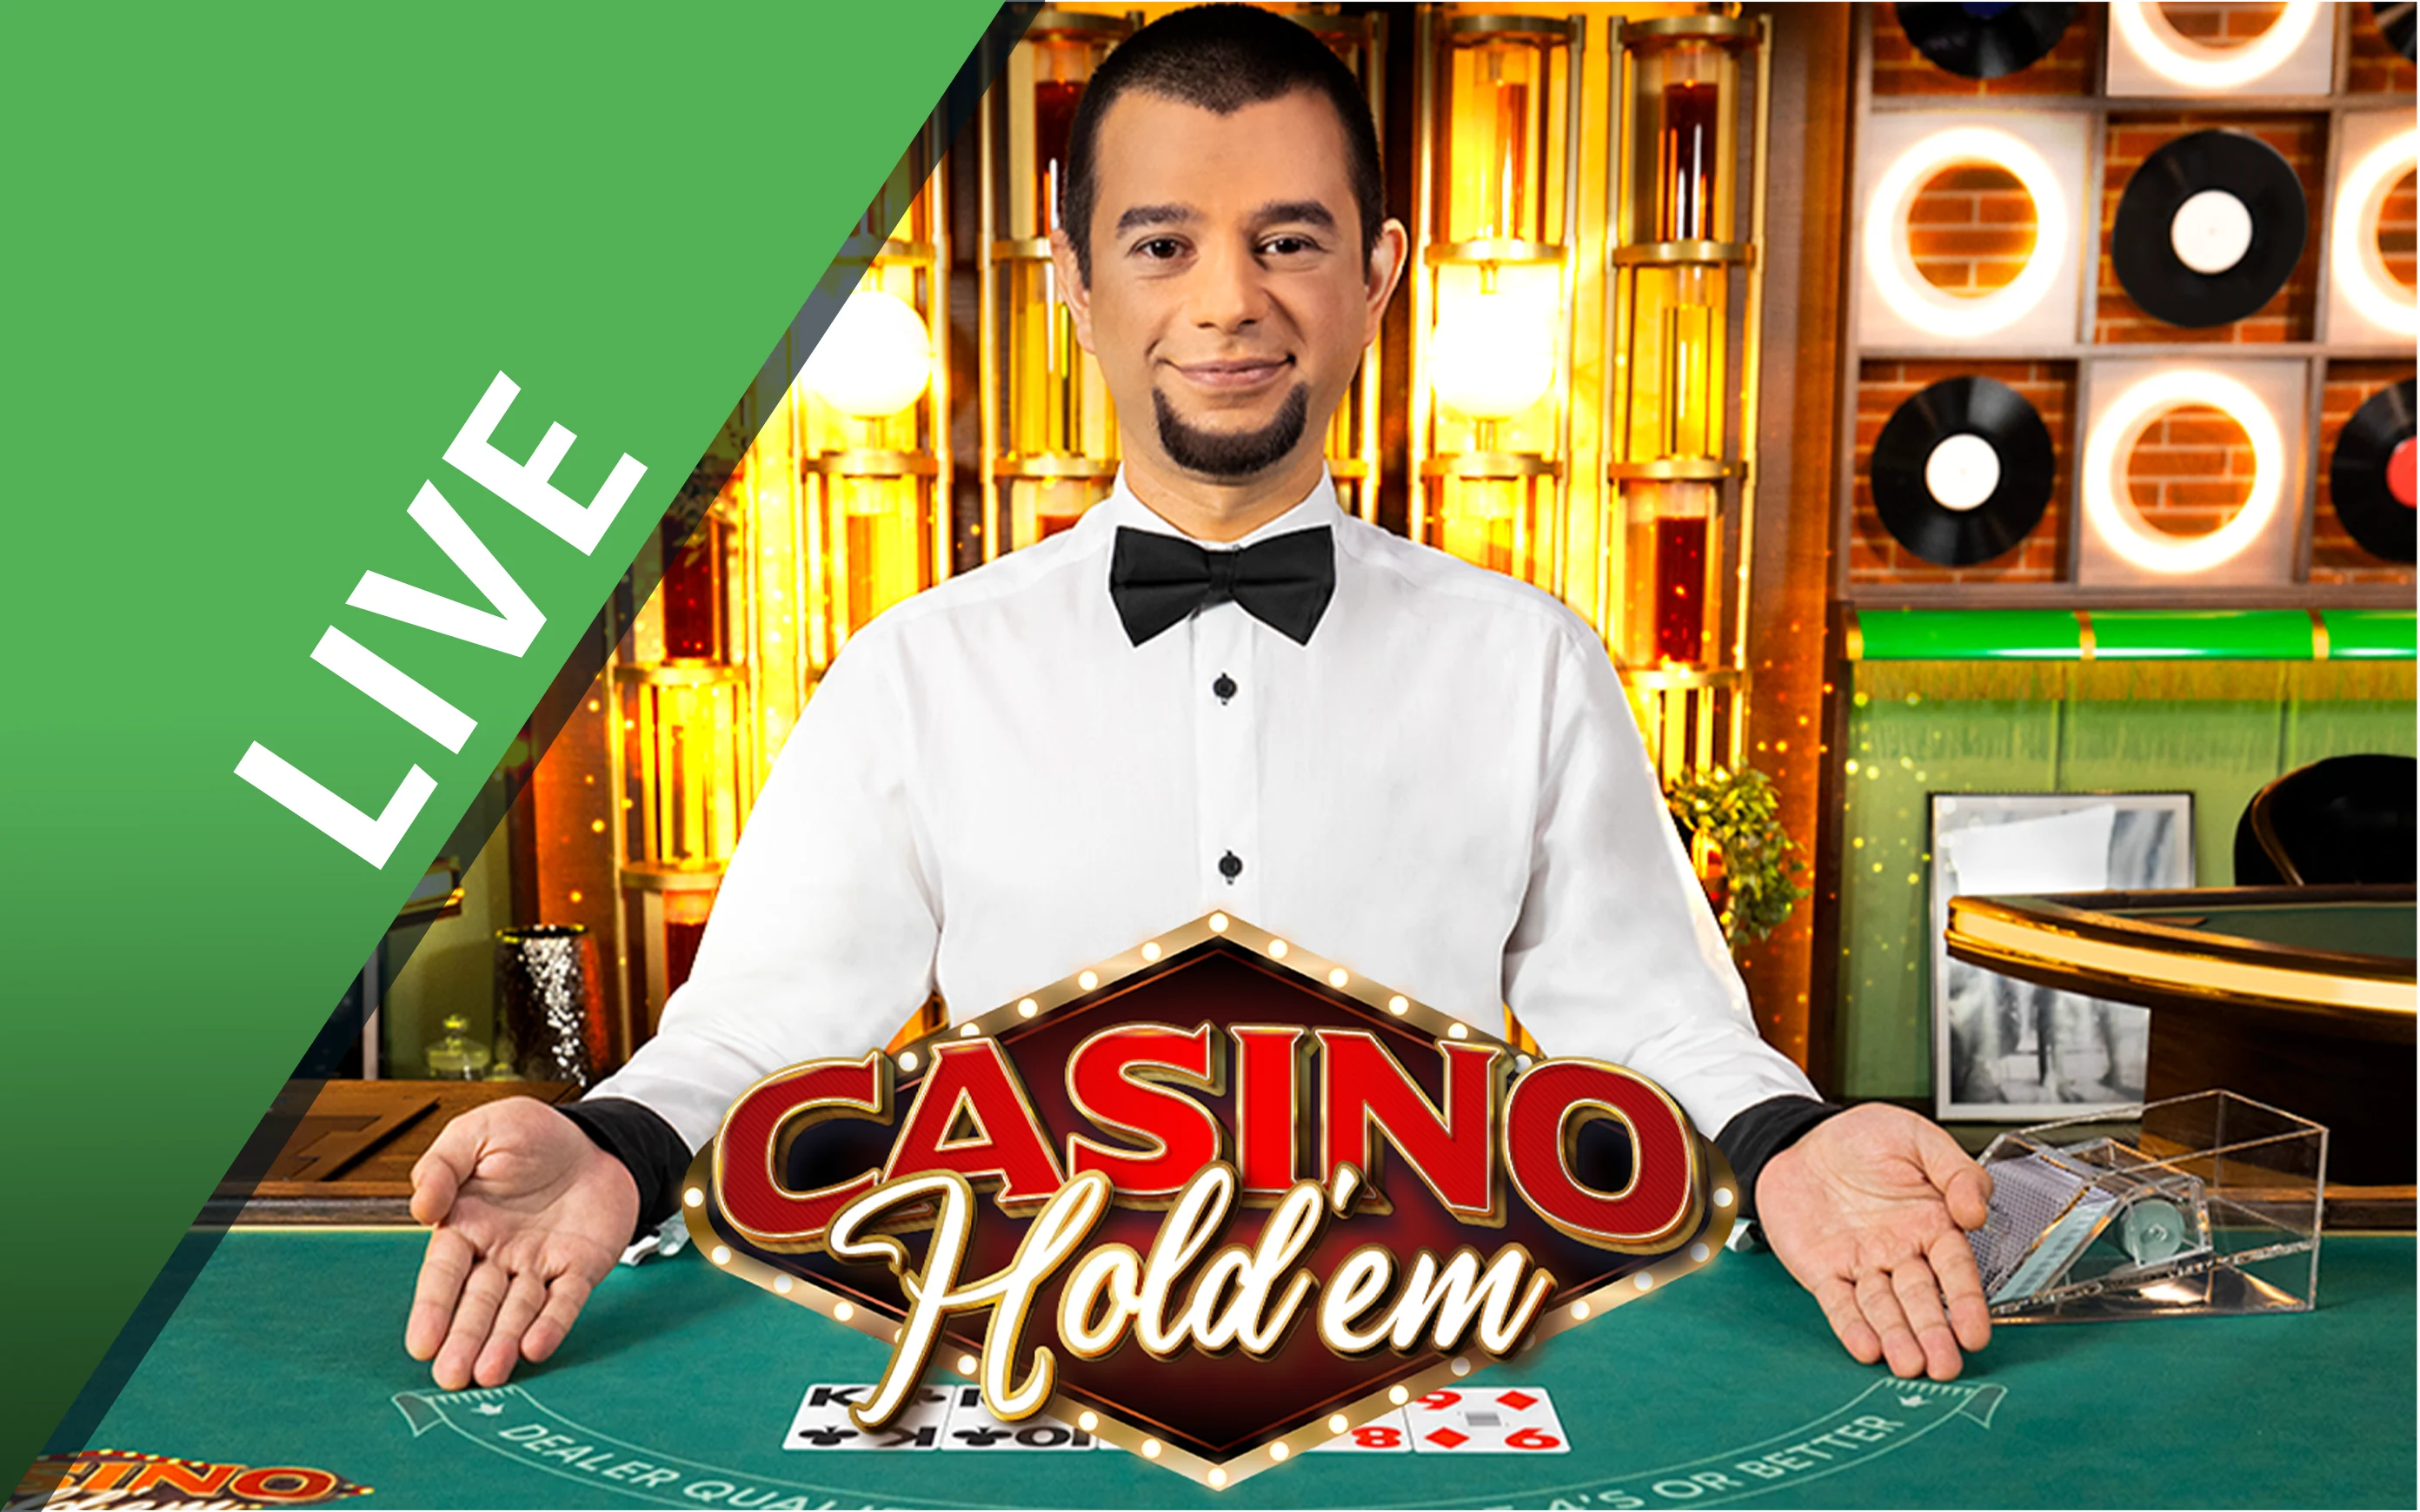 Грайте у Casino Hold'em в онлайн-казино Starcasino.be